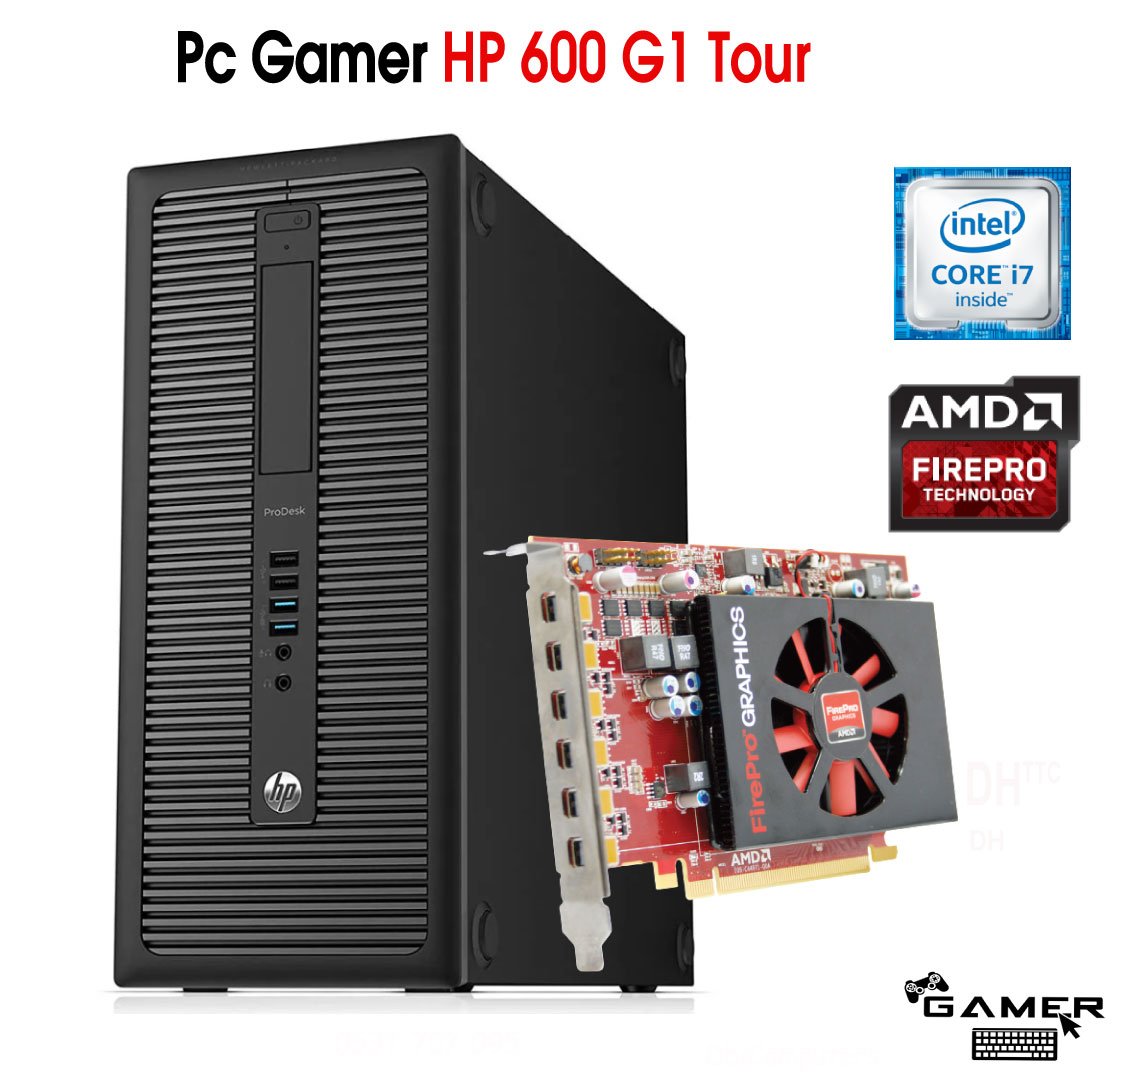 PC GAMER HP ProDesk 600 G1 Tour CPU I7 Ram 8Gb 128GB